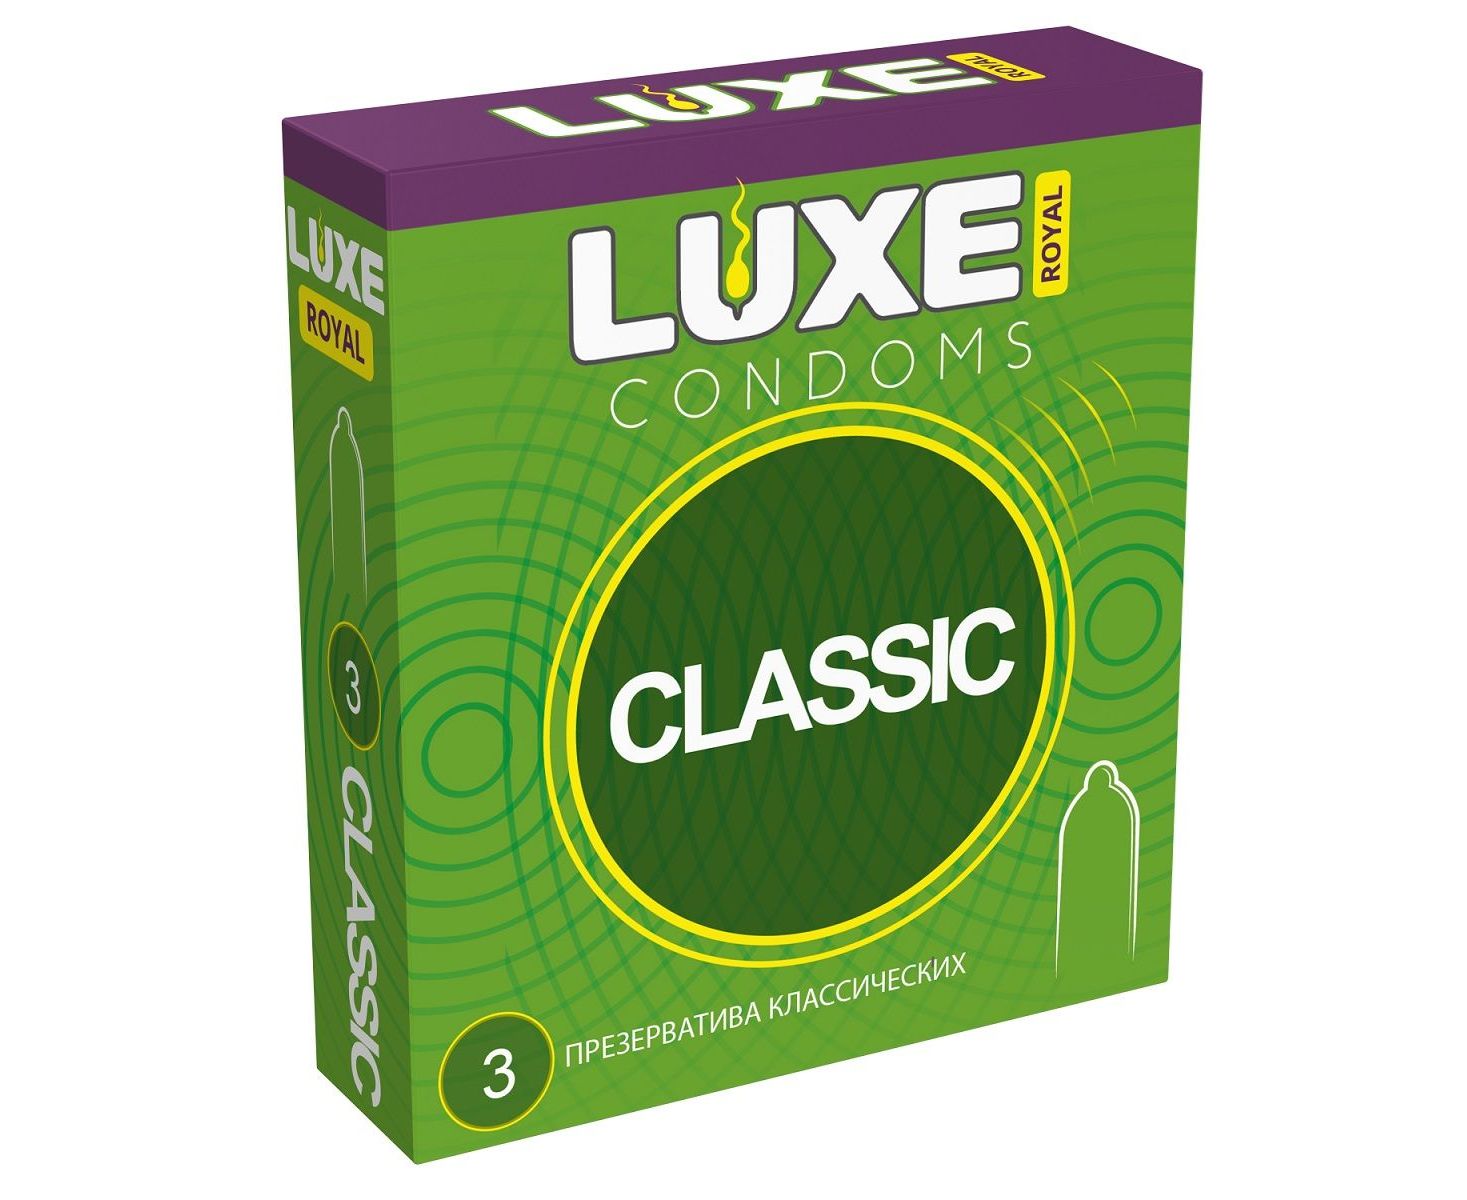 гладкие презервативы luxe royal classic